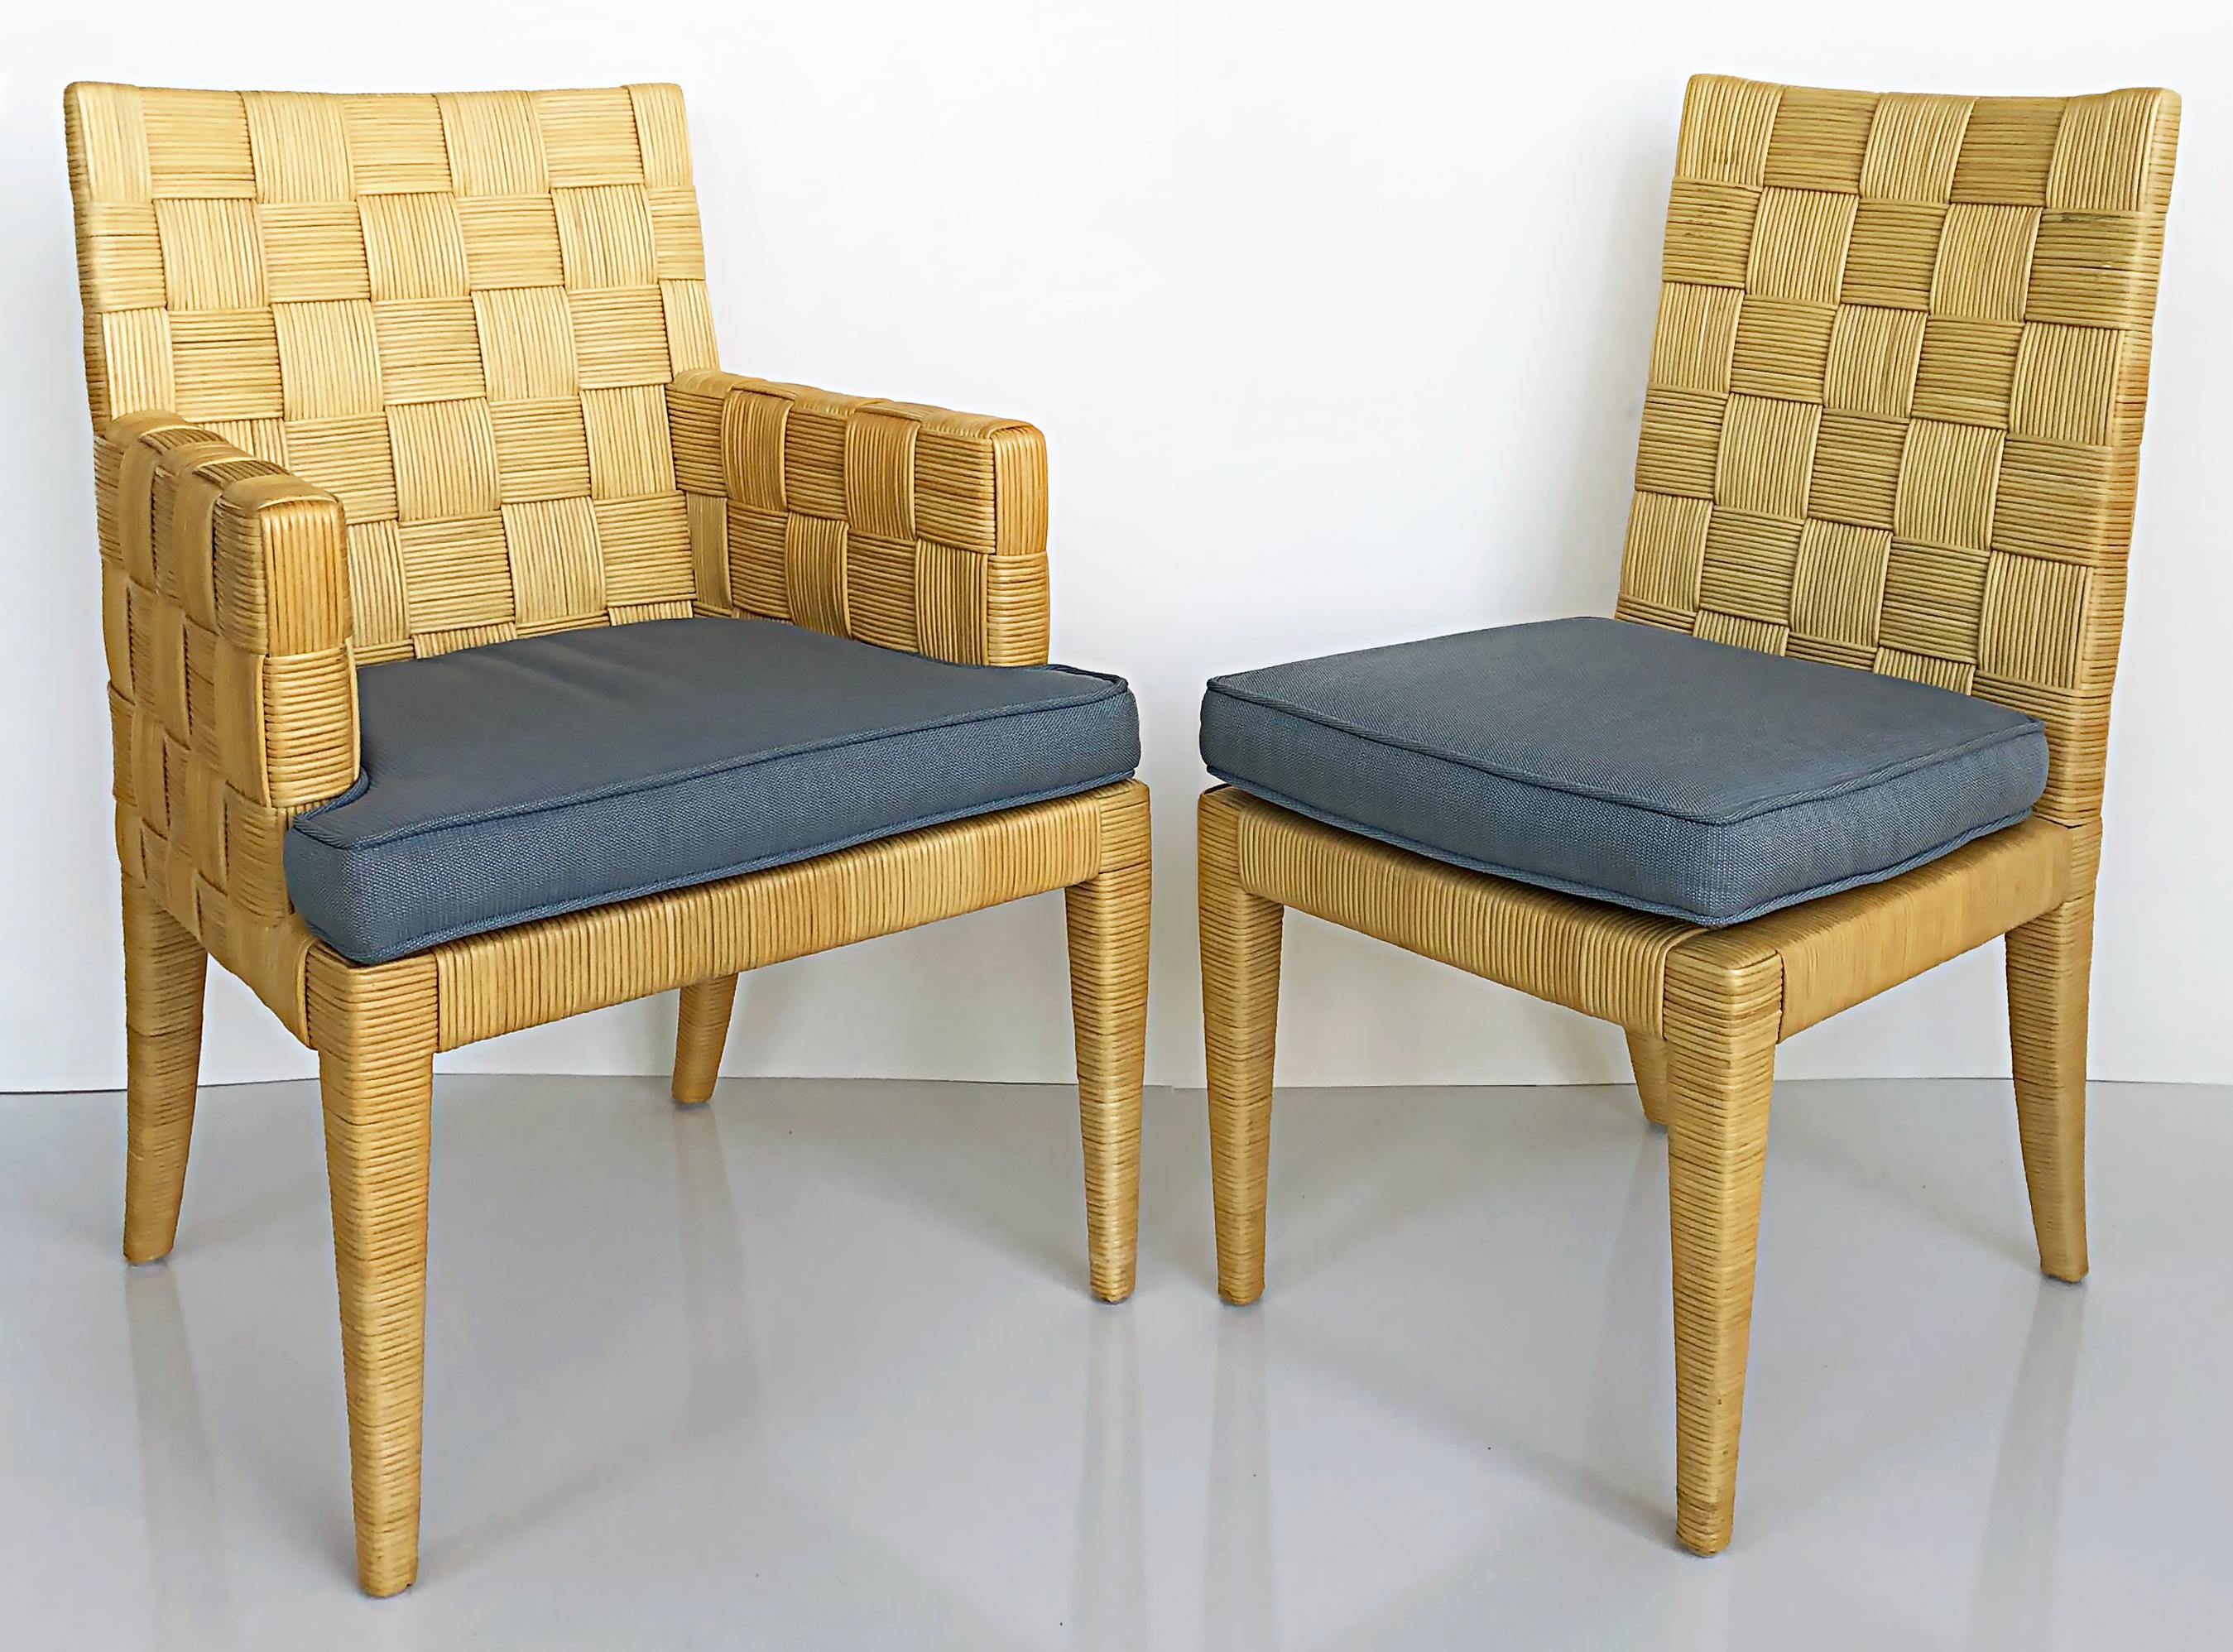 Organic Modern John Hutton Donghia Block Island Rattan Dining Chairs Set, 2 Arms, 6 Sides